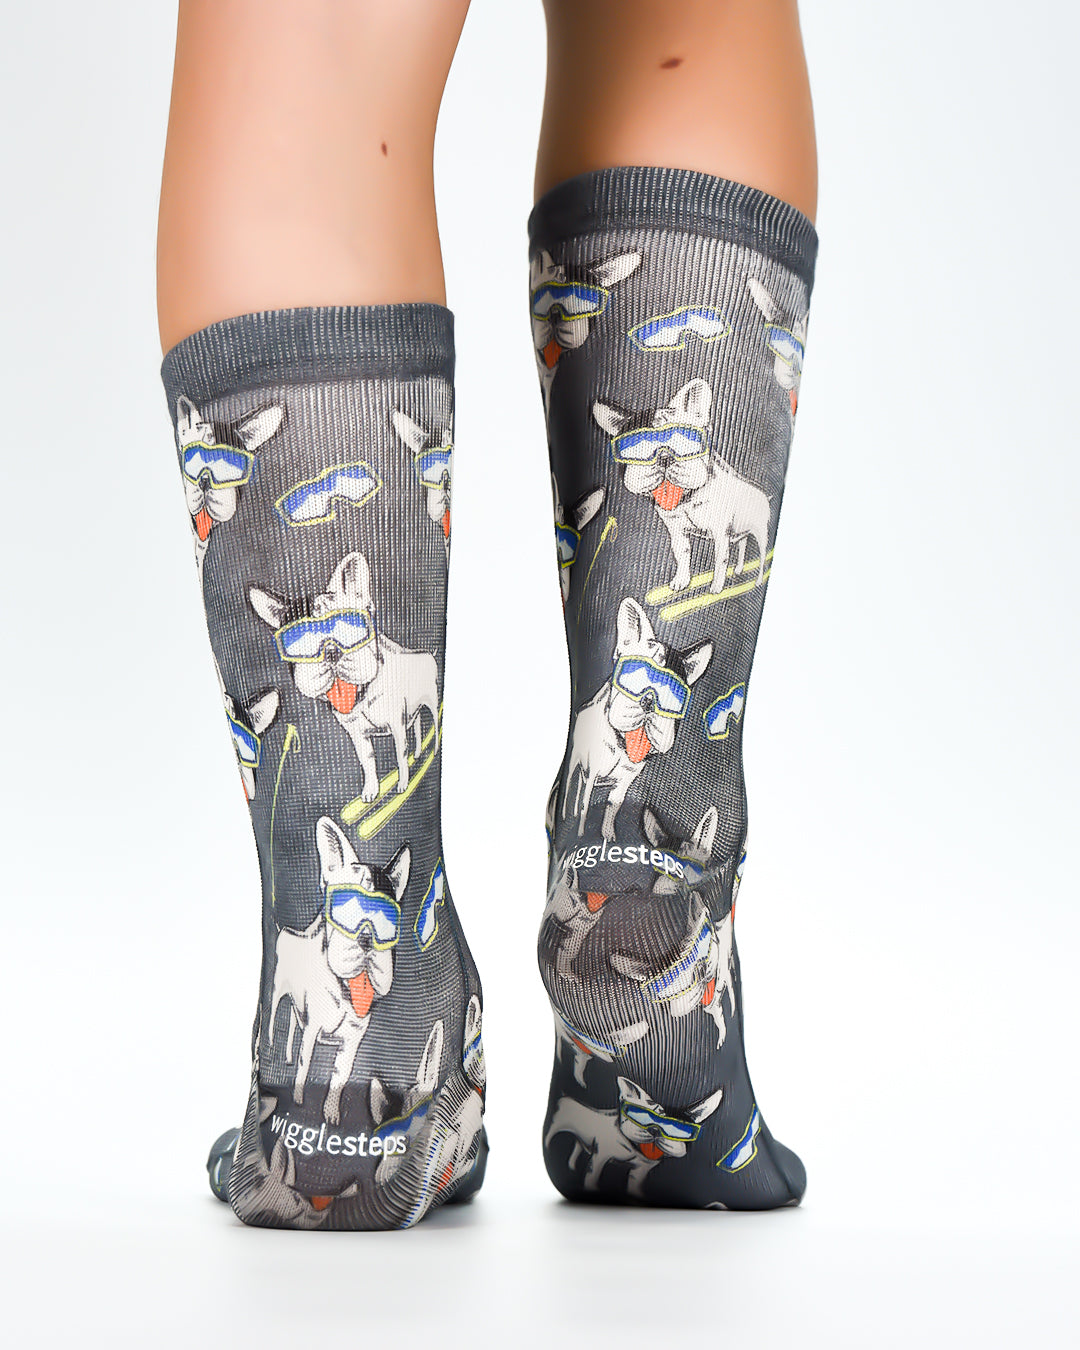 Skier Dog Kids Socks